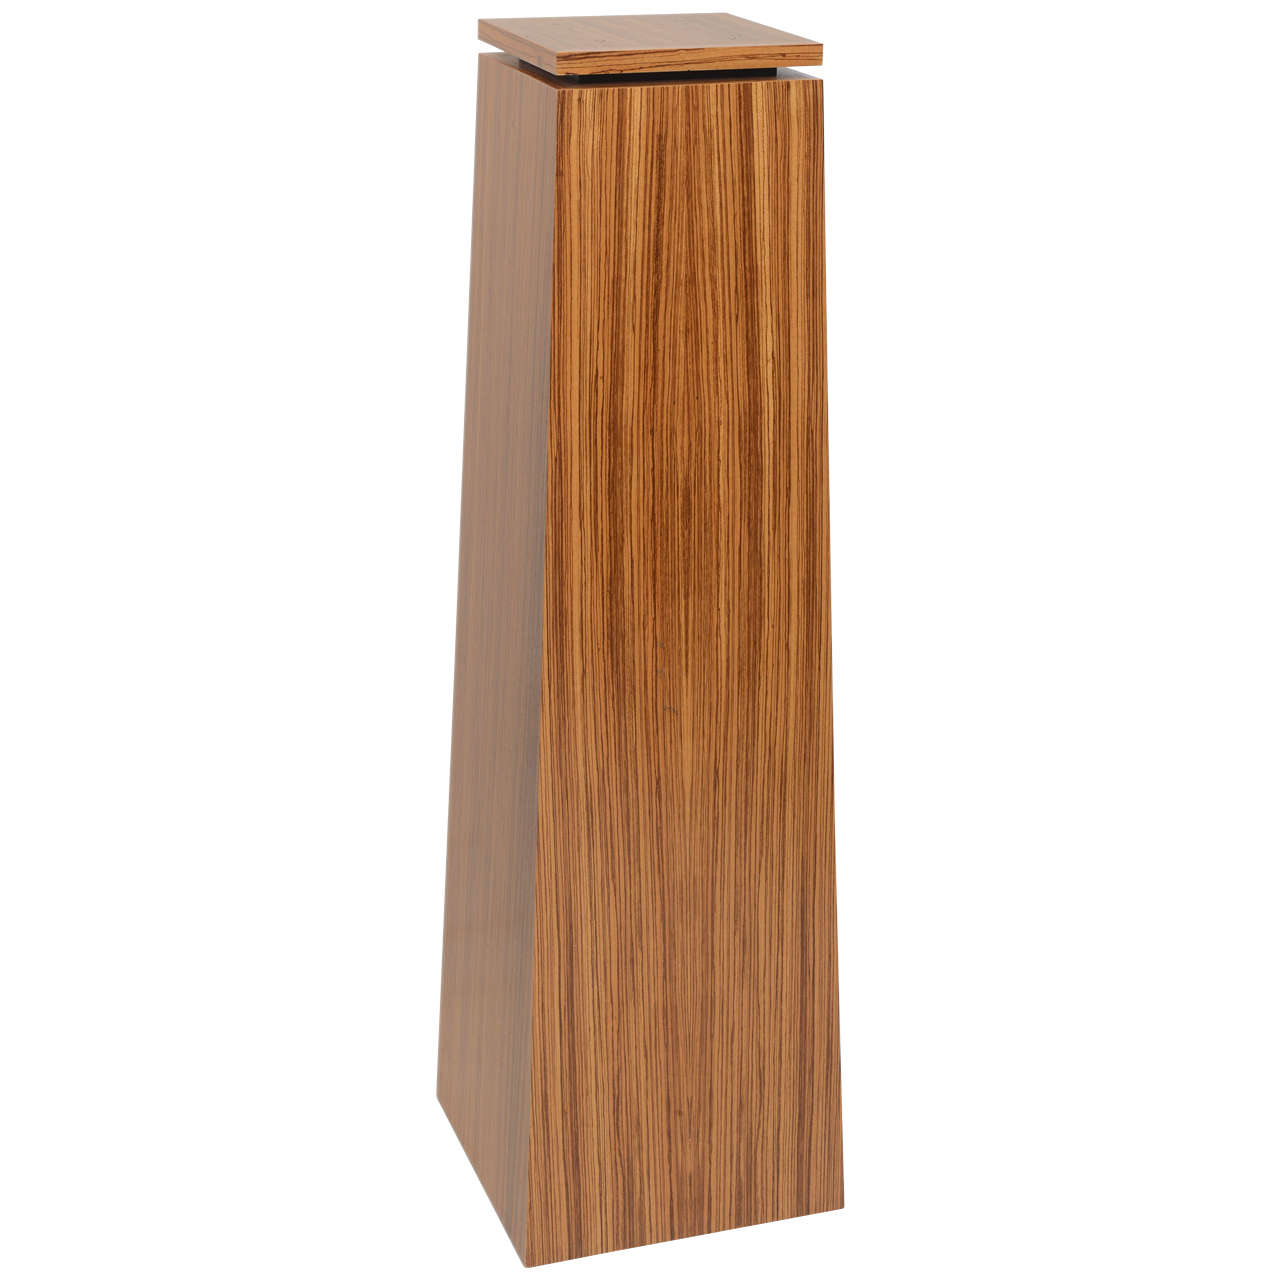 Obelisk Form, Art Deco Style Pedestal in Zebrano Wood